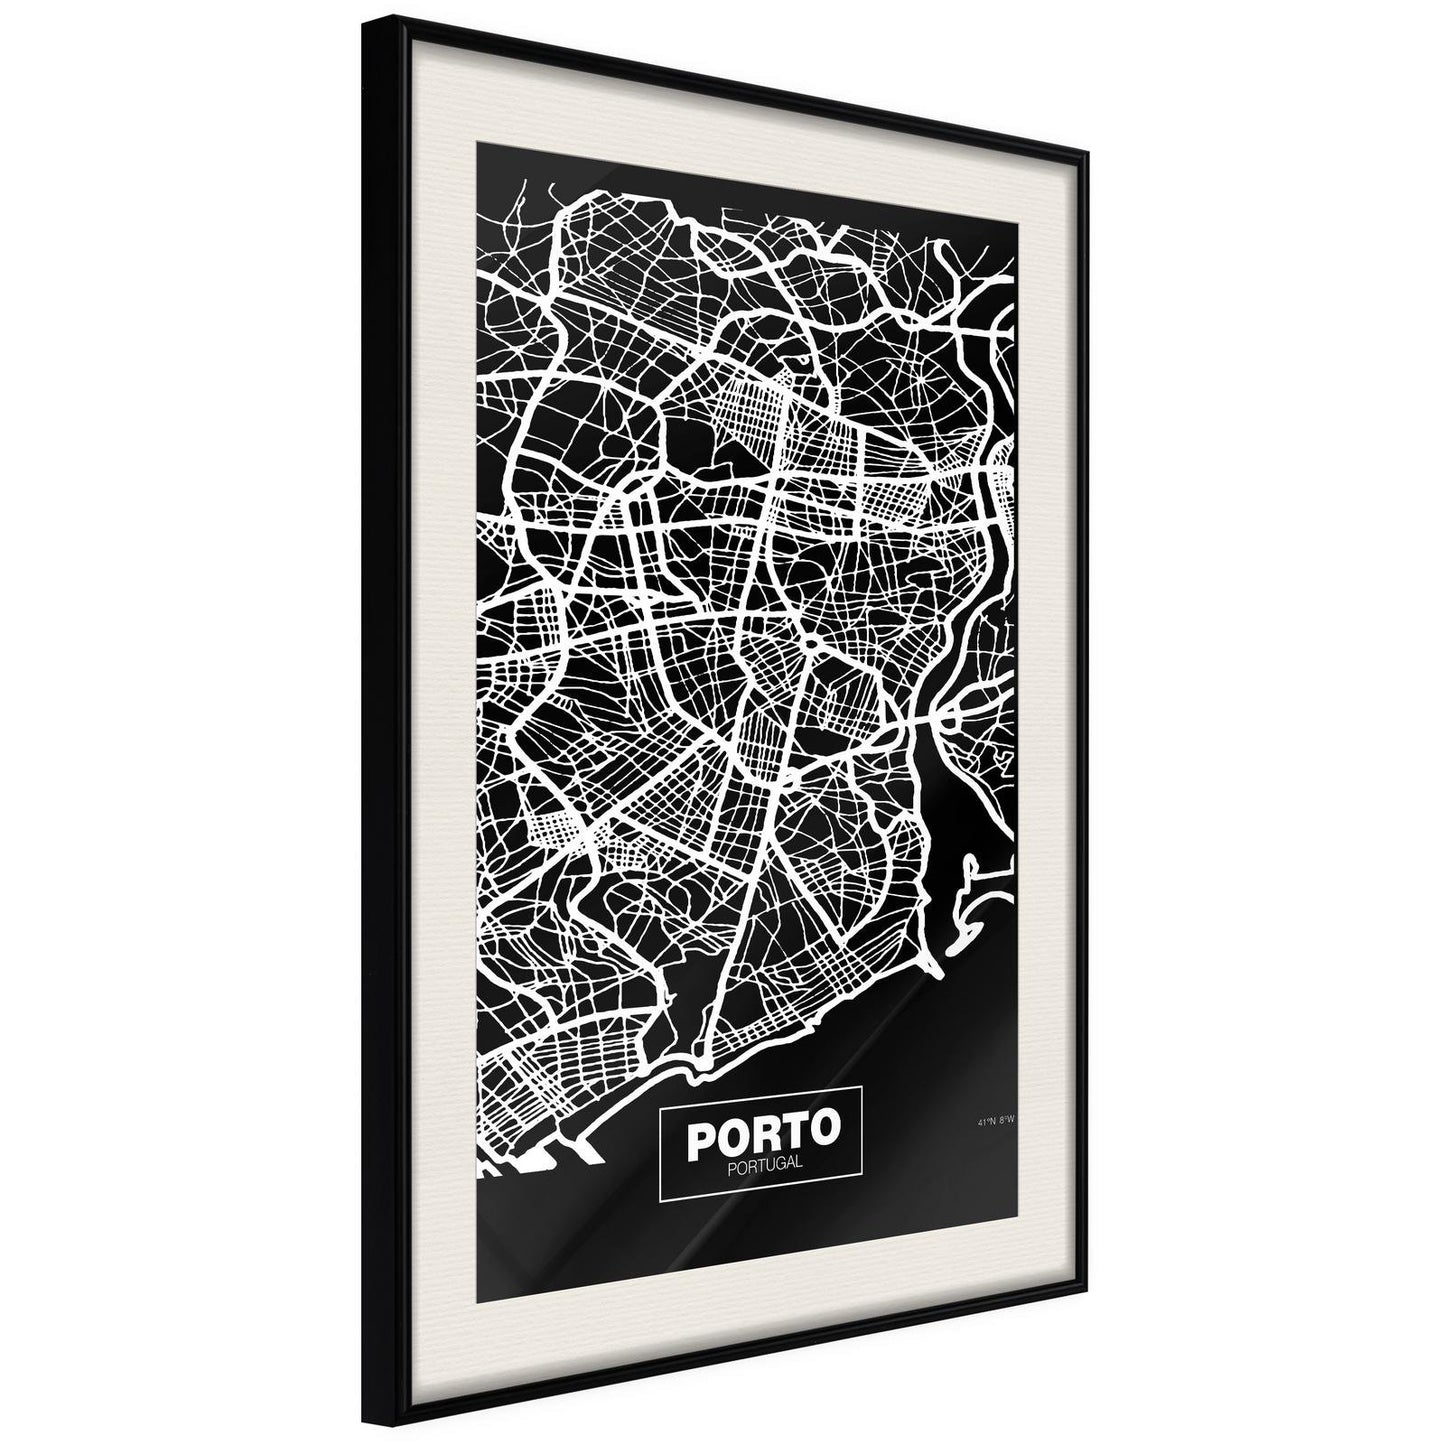 Stadtplan: Porto (dunkel)